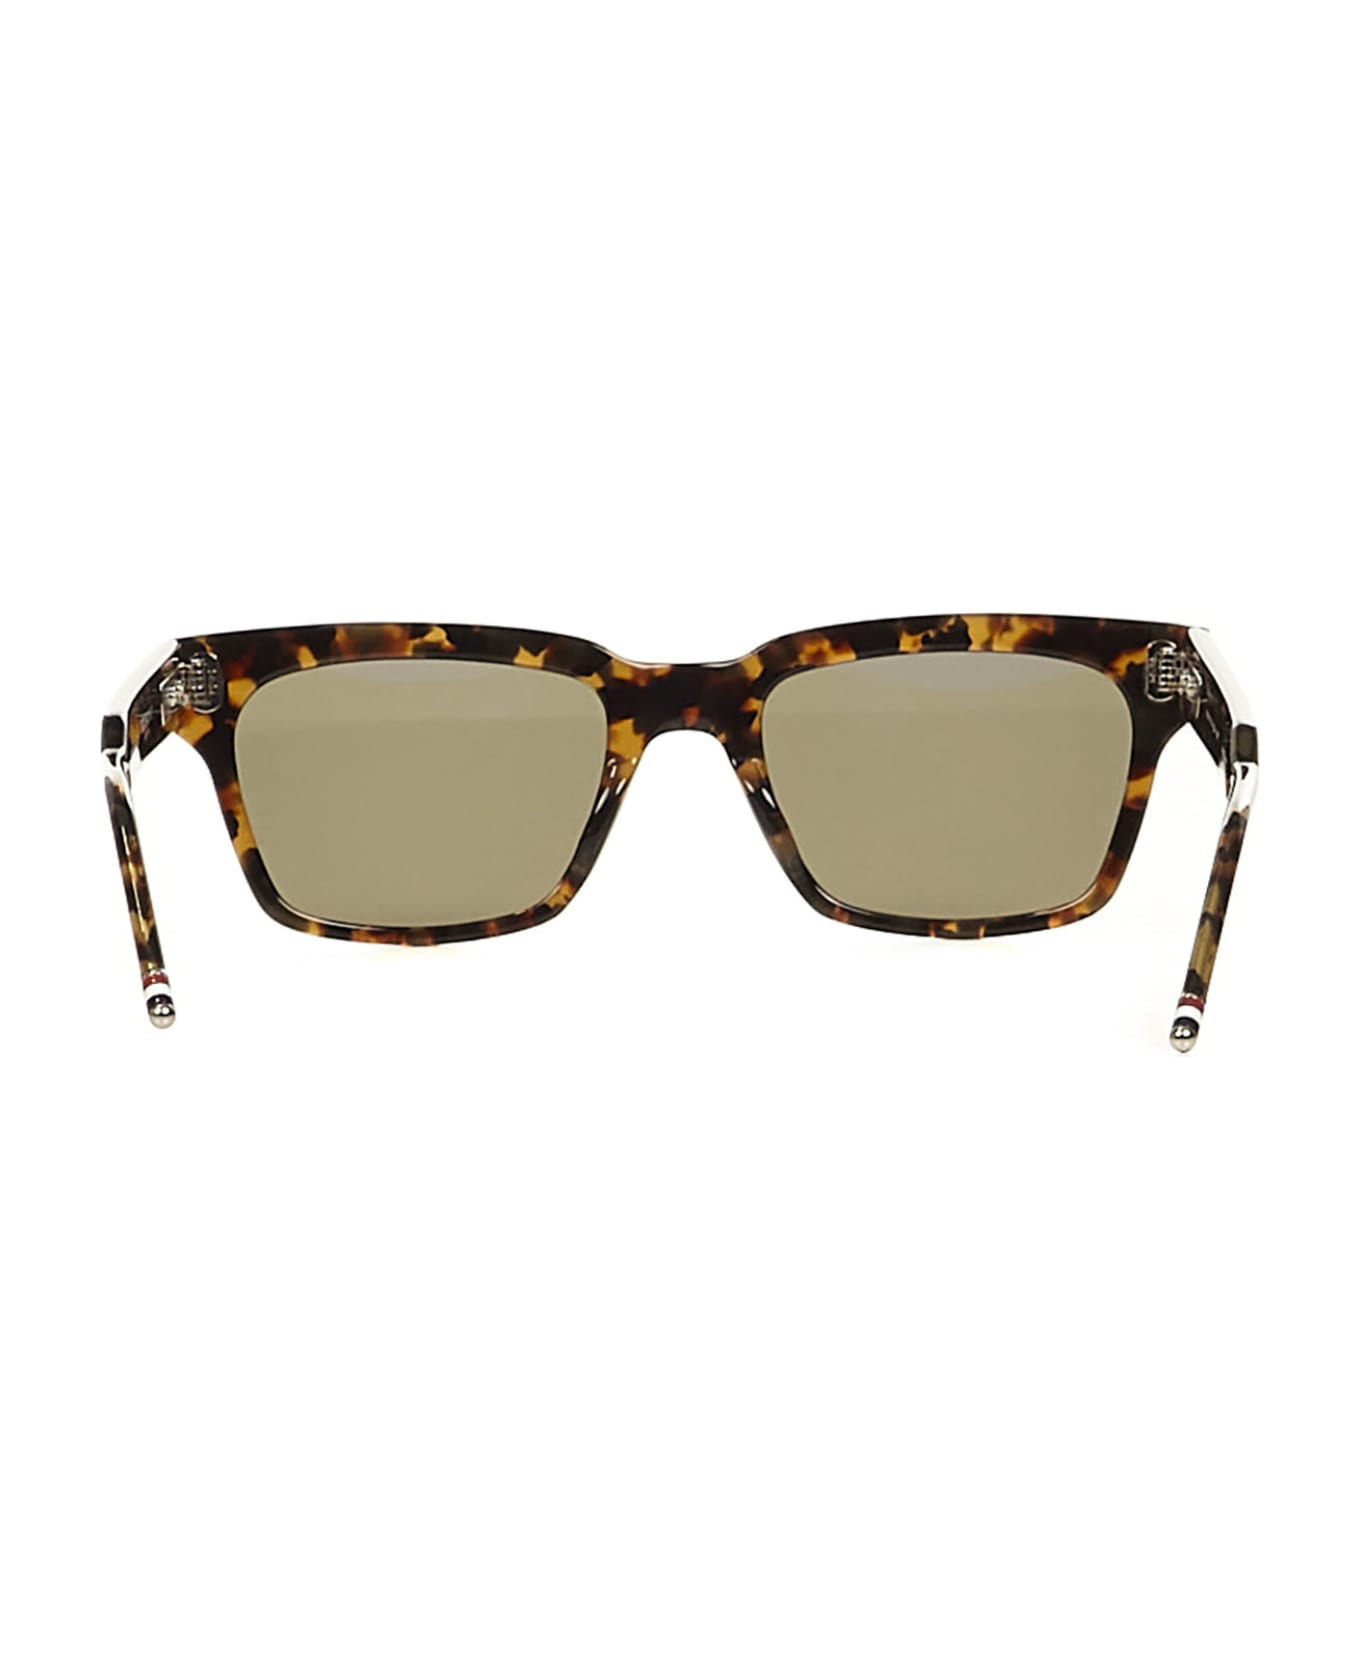 Thom Browne Sunglasses Tb418 Sunglasses - Brown サングラス